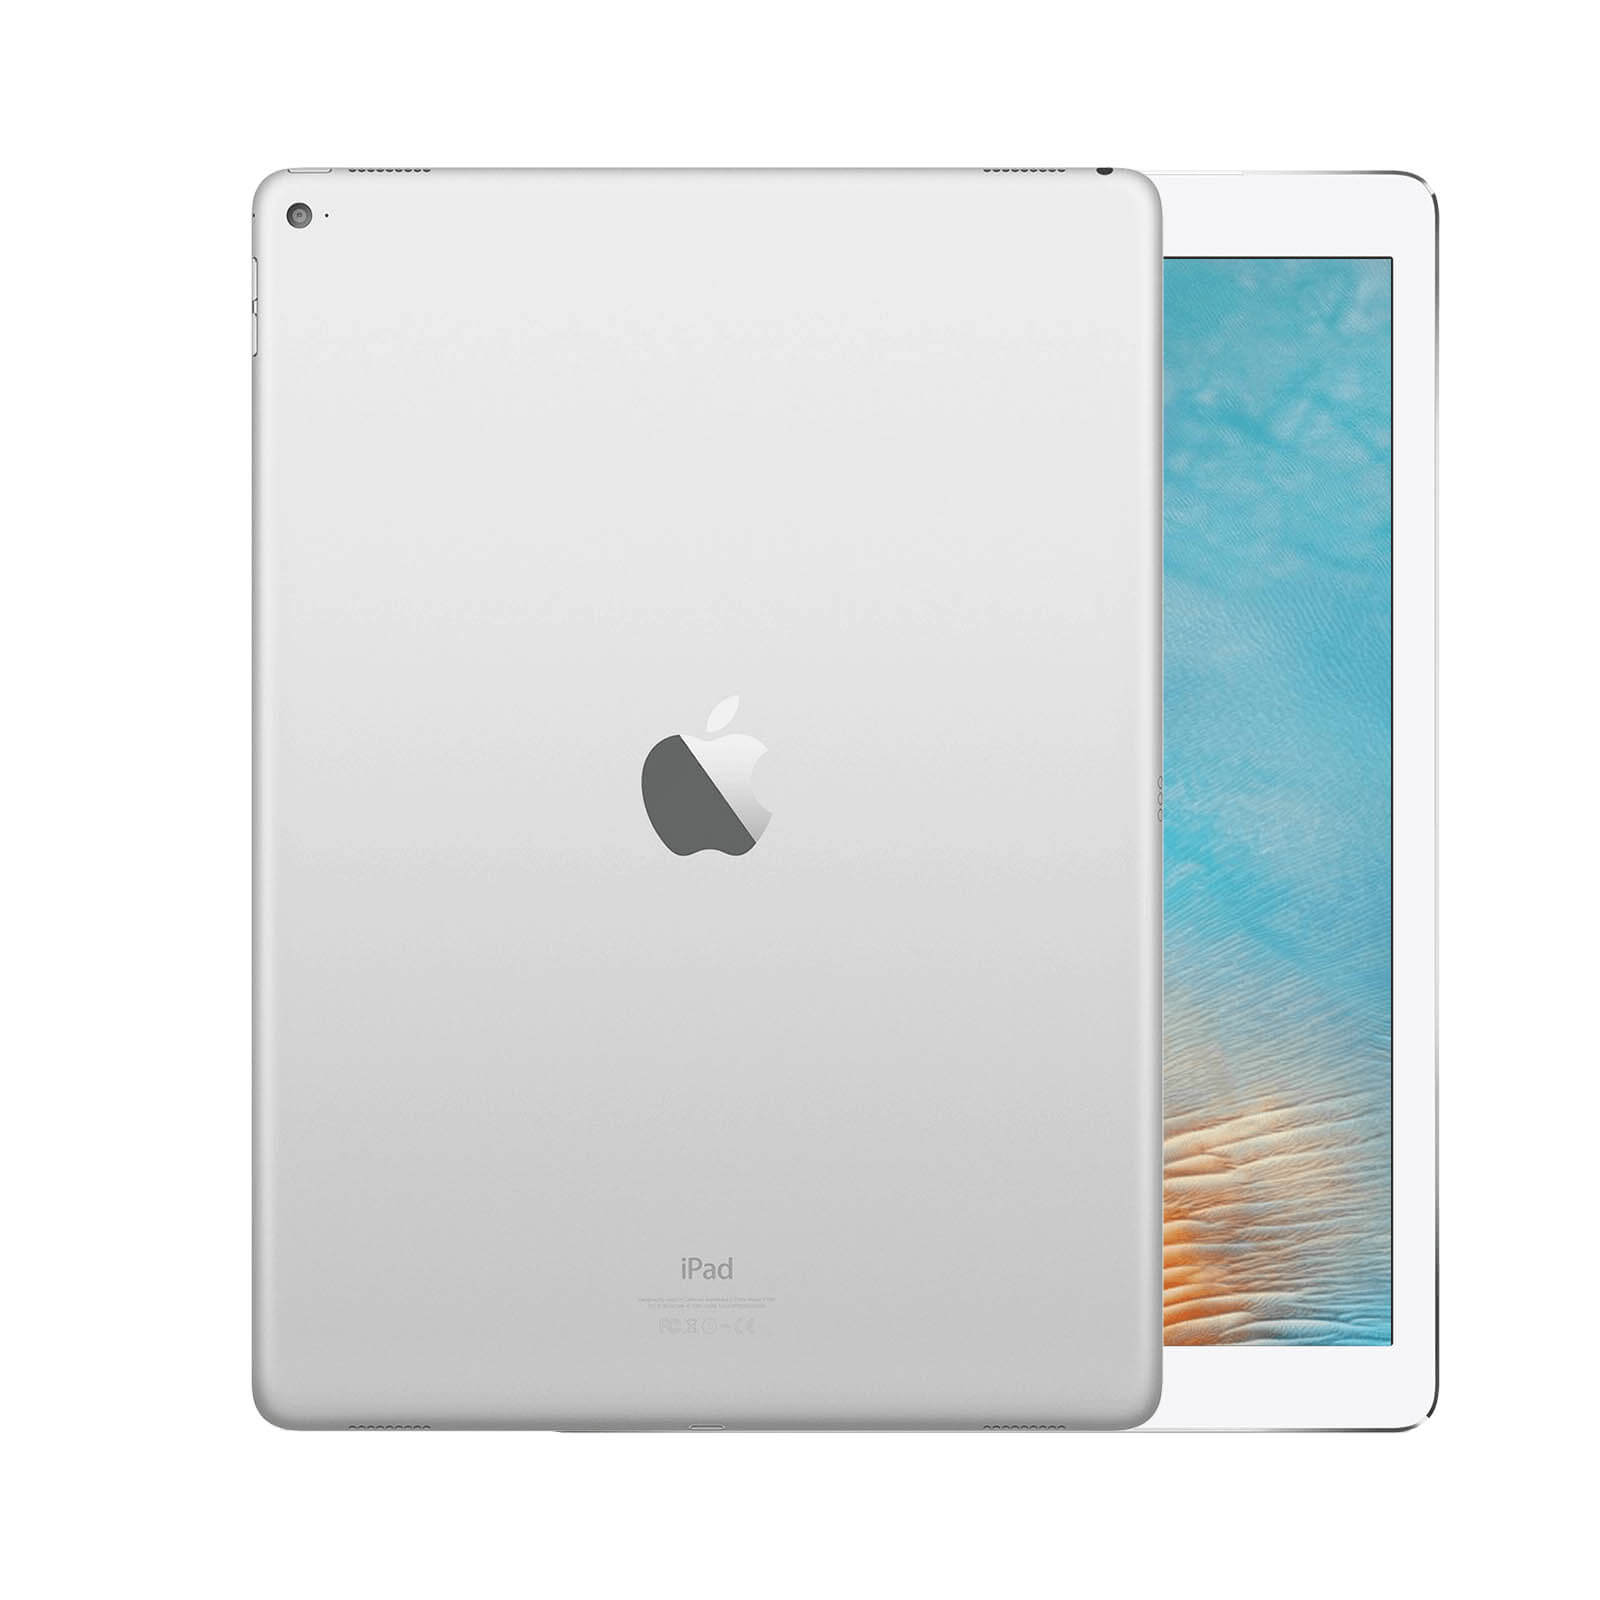 iPad Pro 12.9 Inch 2nd Gen 512GB Silver Good - WiFi